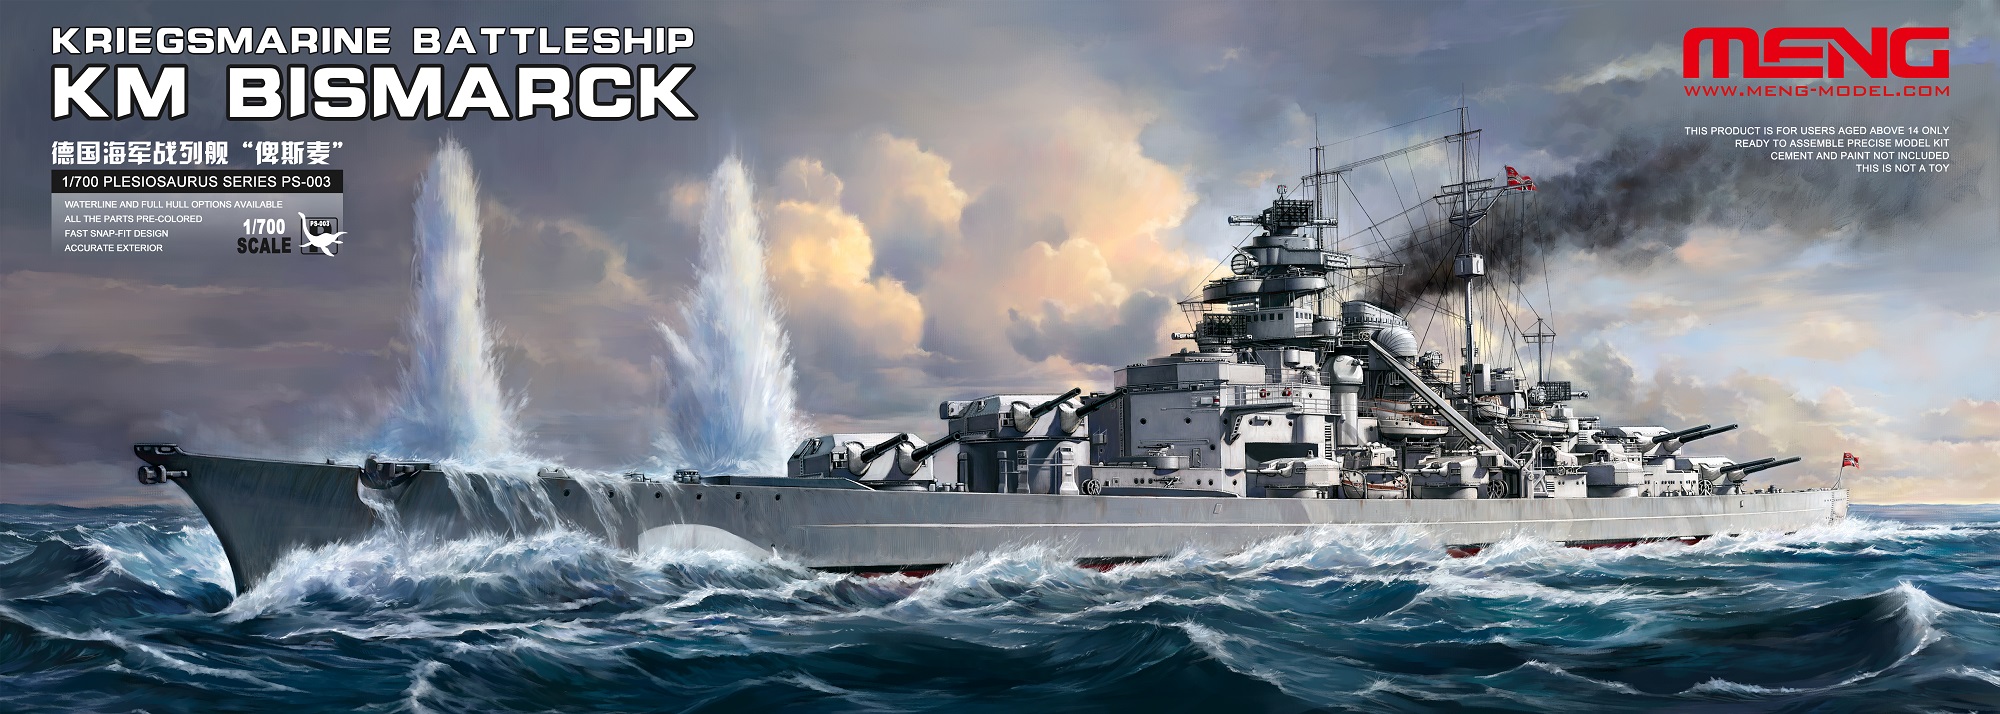 1/700 Kriegsmarine Battleship KM Bismarck - Click Image to Close